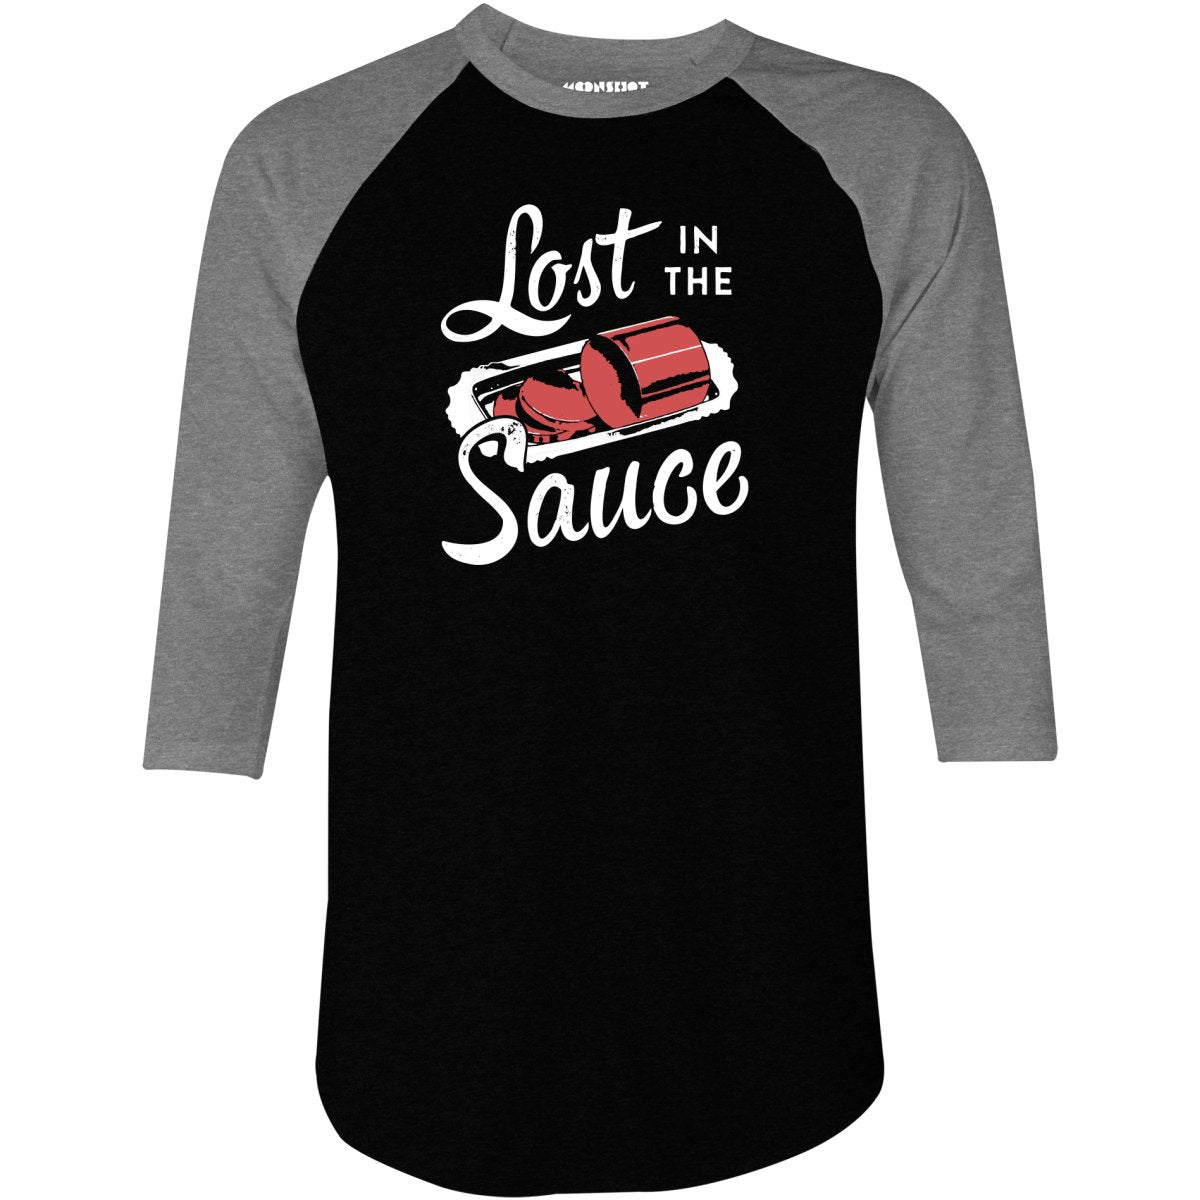 Lost in the Sauce - 3/4 Sleeve Raglan T-Shirt